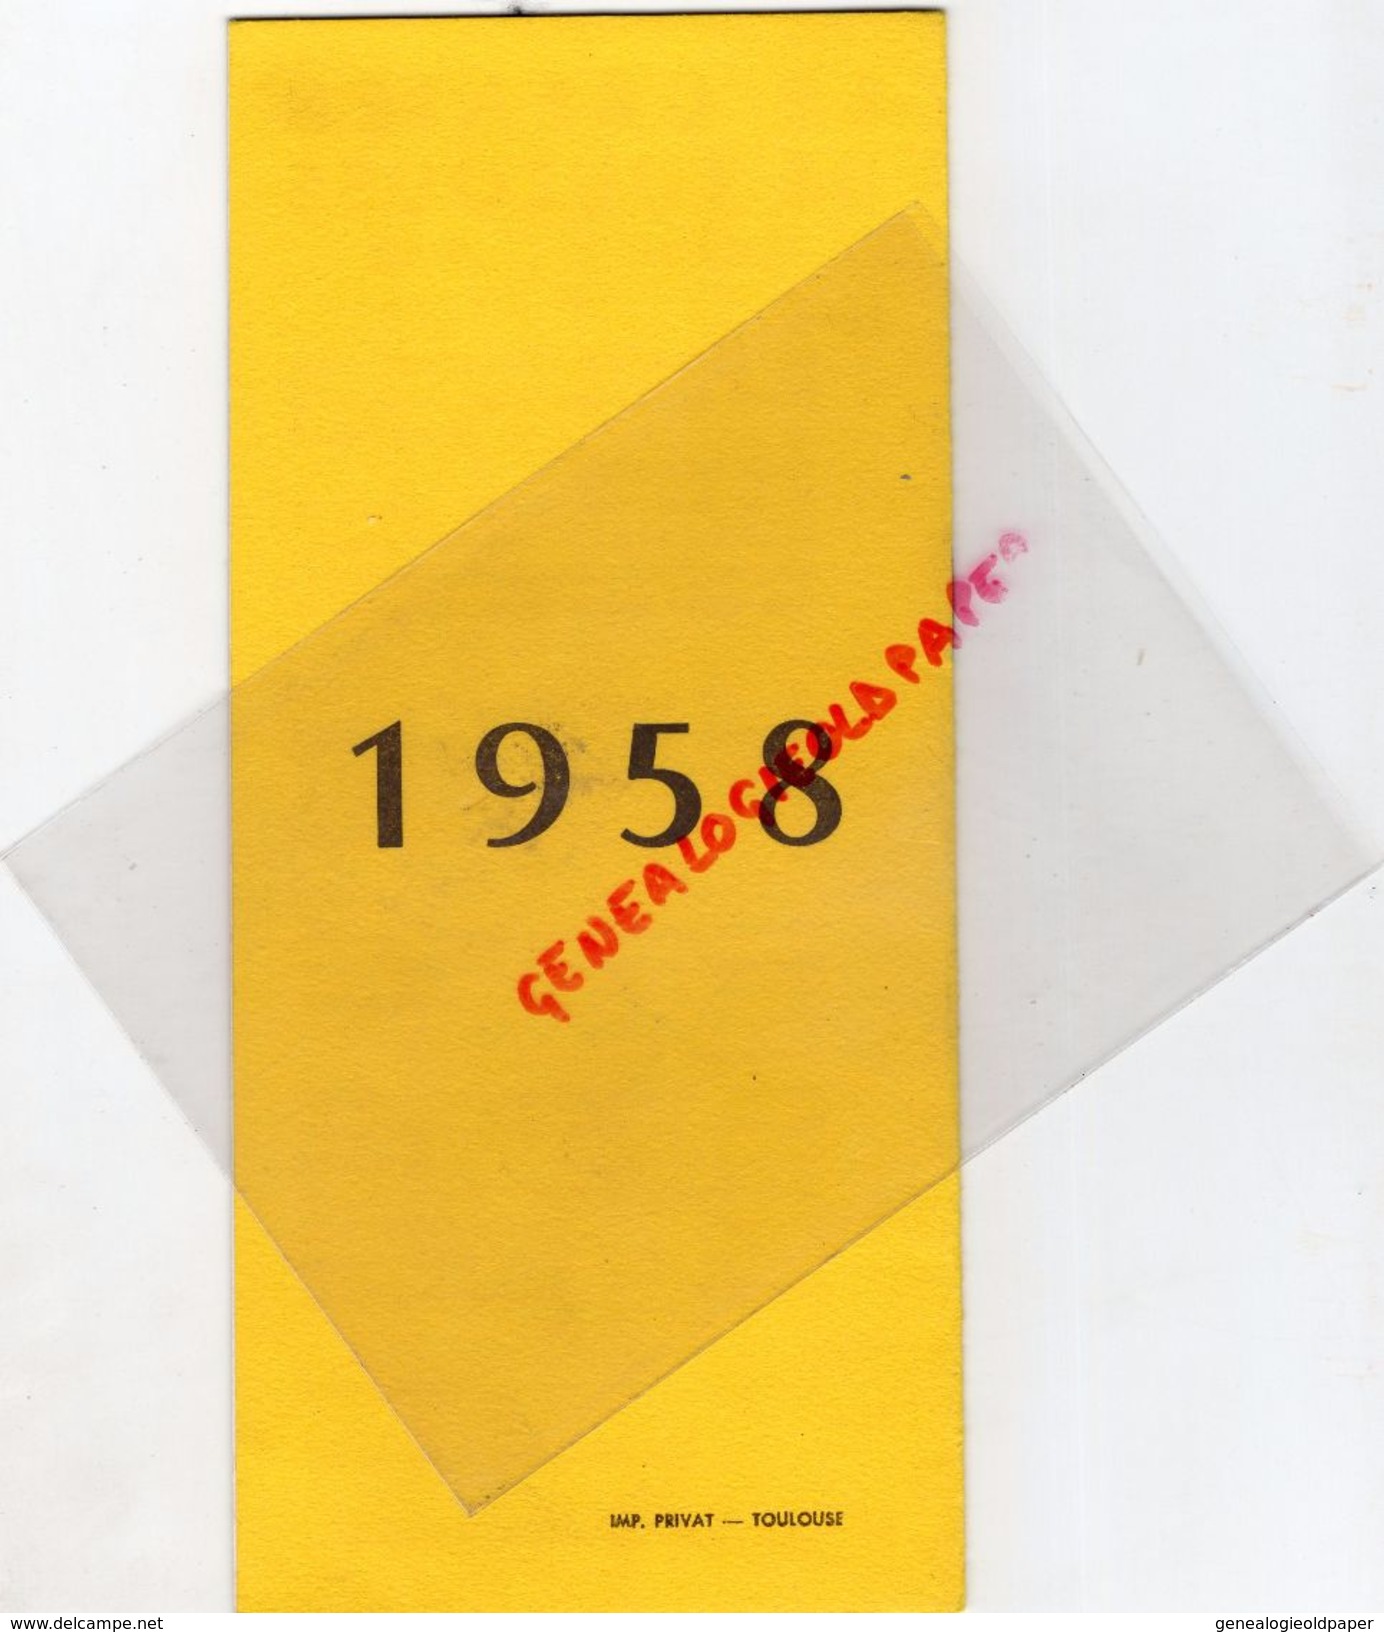 31 - TOULOUSE - PROGRAMME LE GRENIER -1958-L' HISTOIRE DU SOLDAT- IGOR STAVINSKY-JEAN FAVAREL-RENE BERGIL-SERGE BAUDO- - Programme